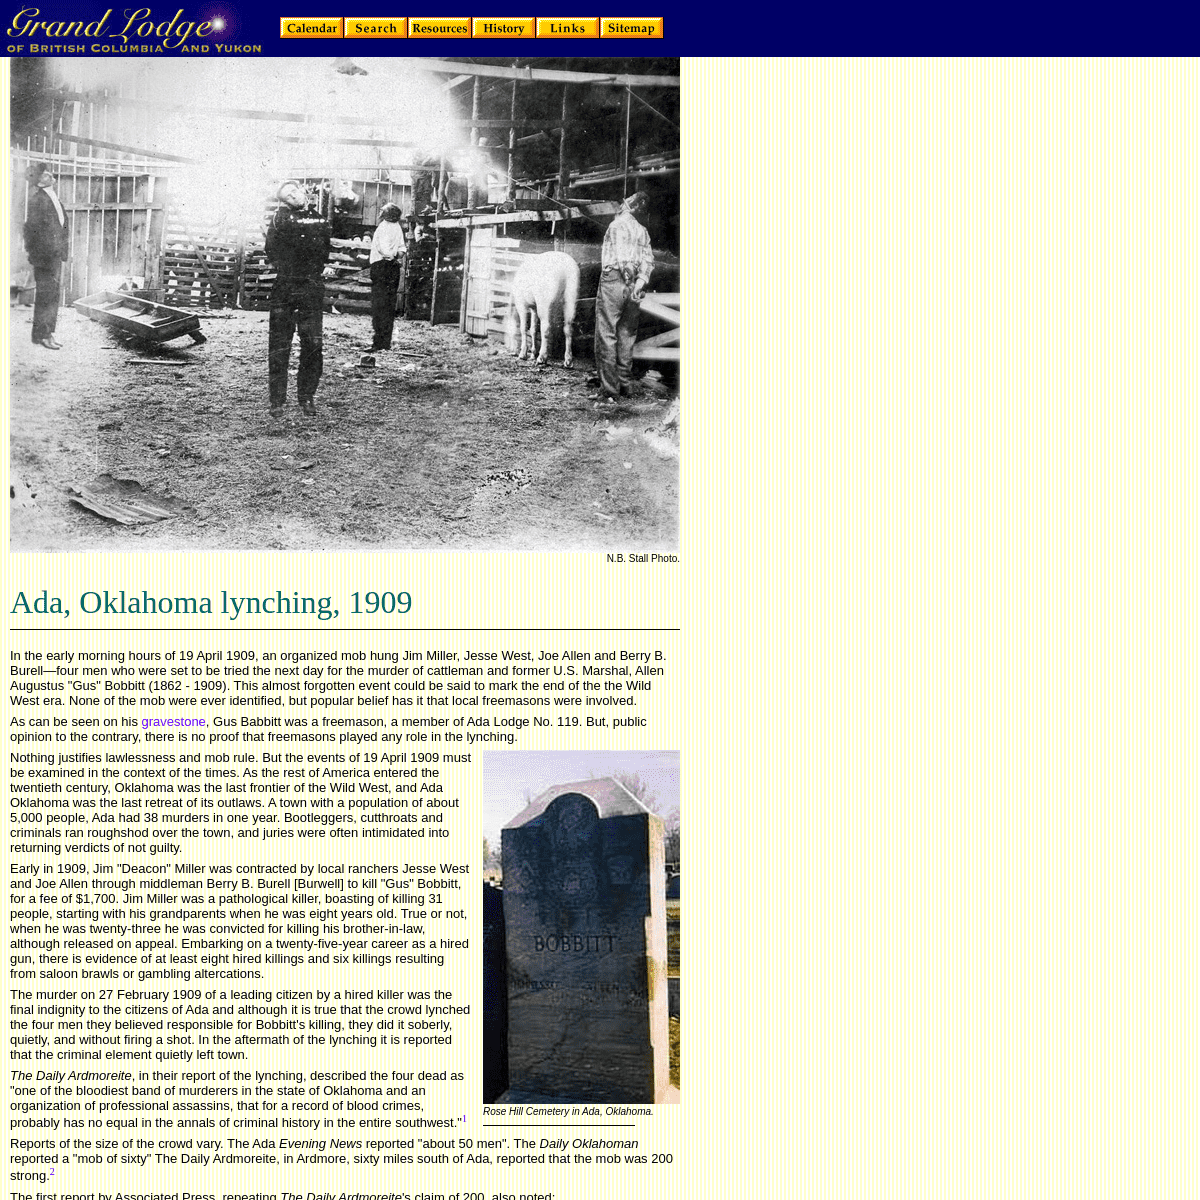 A complete backup of http://www.freemasonry.bcy.ca/history/ada_lynching.html